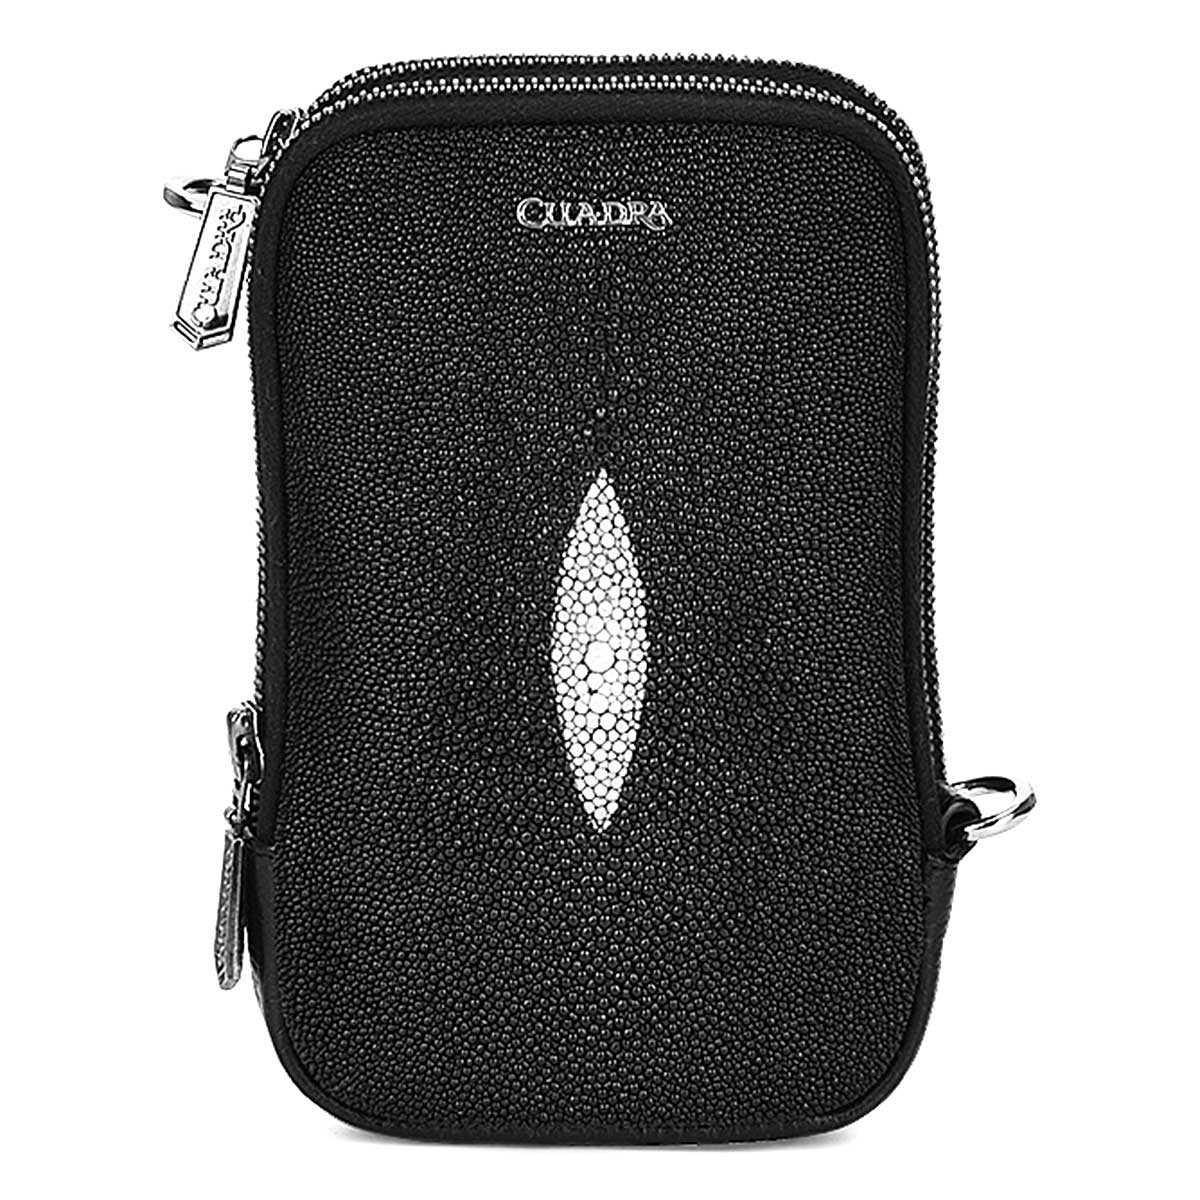 Black exotic leather cell phone bag - BOD38MA - Cuadra Shop